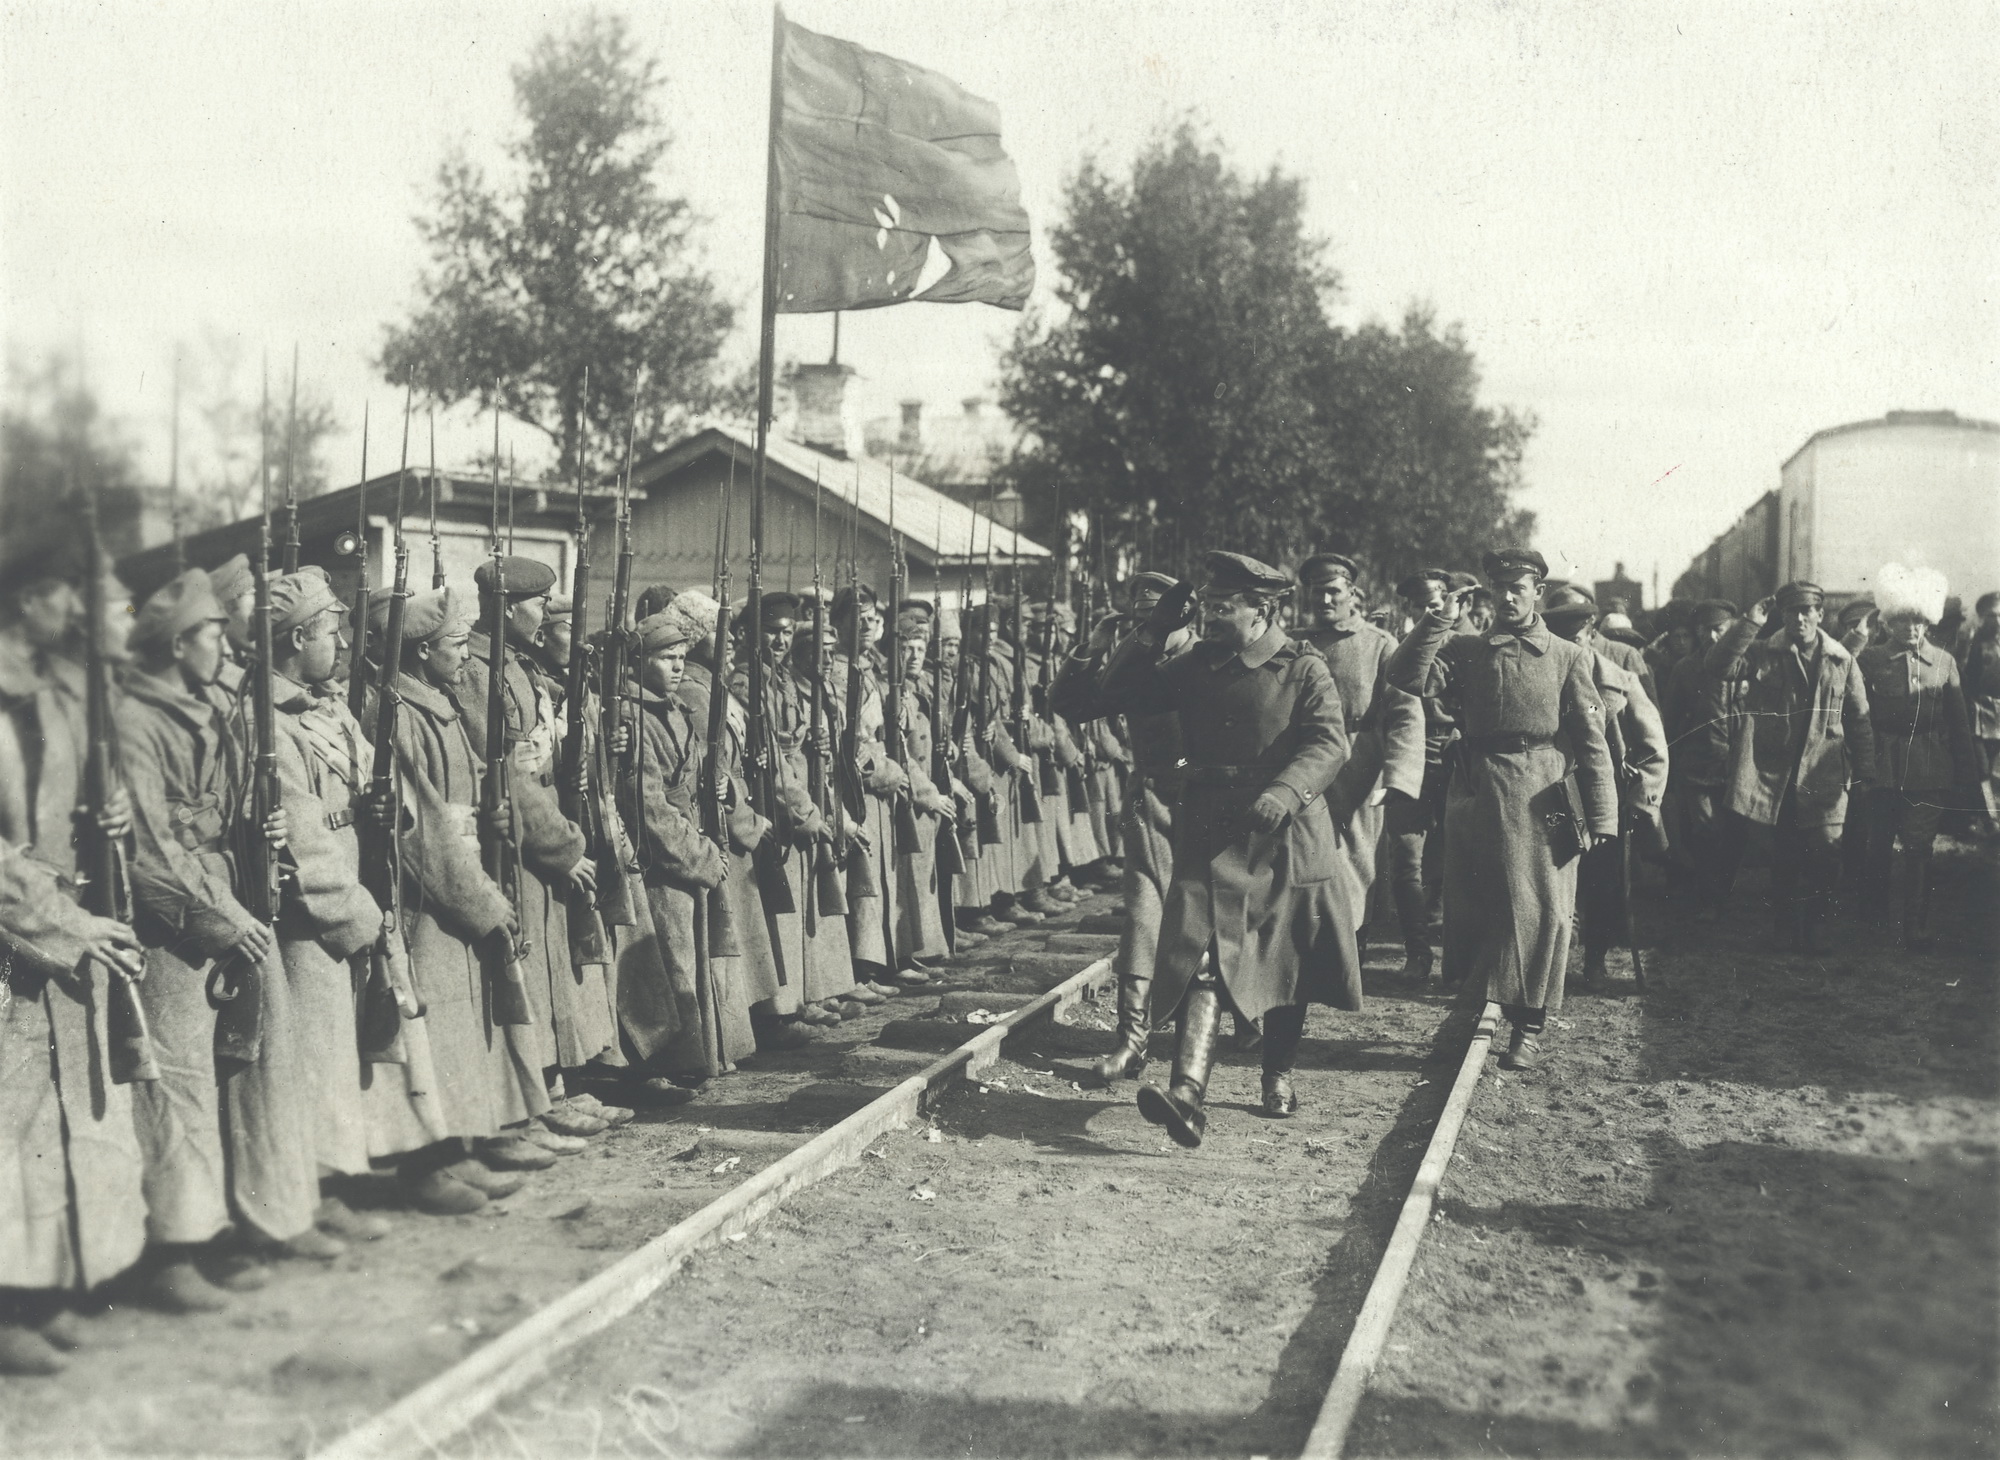 Leu00f3n Trotski saluda a un grupo de soldados, 1919